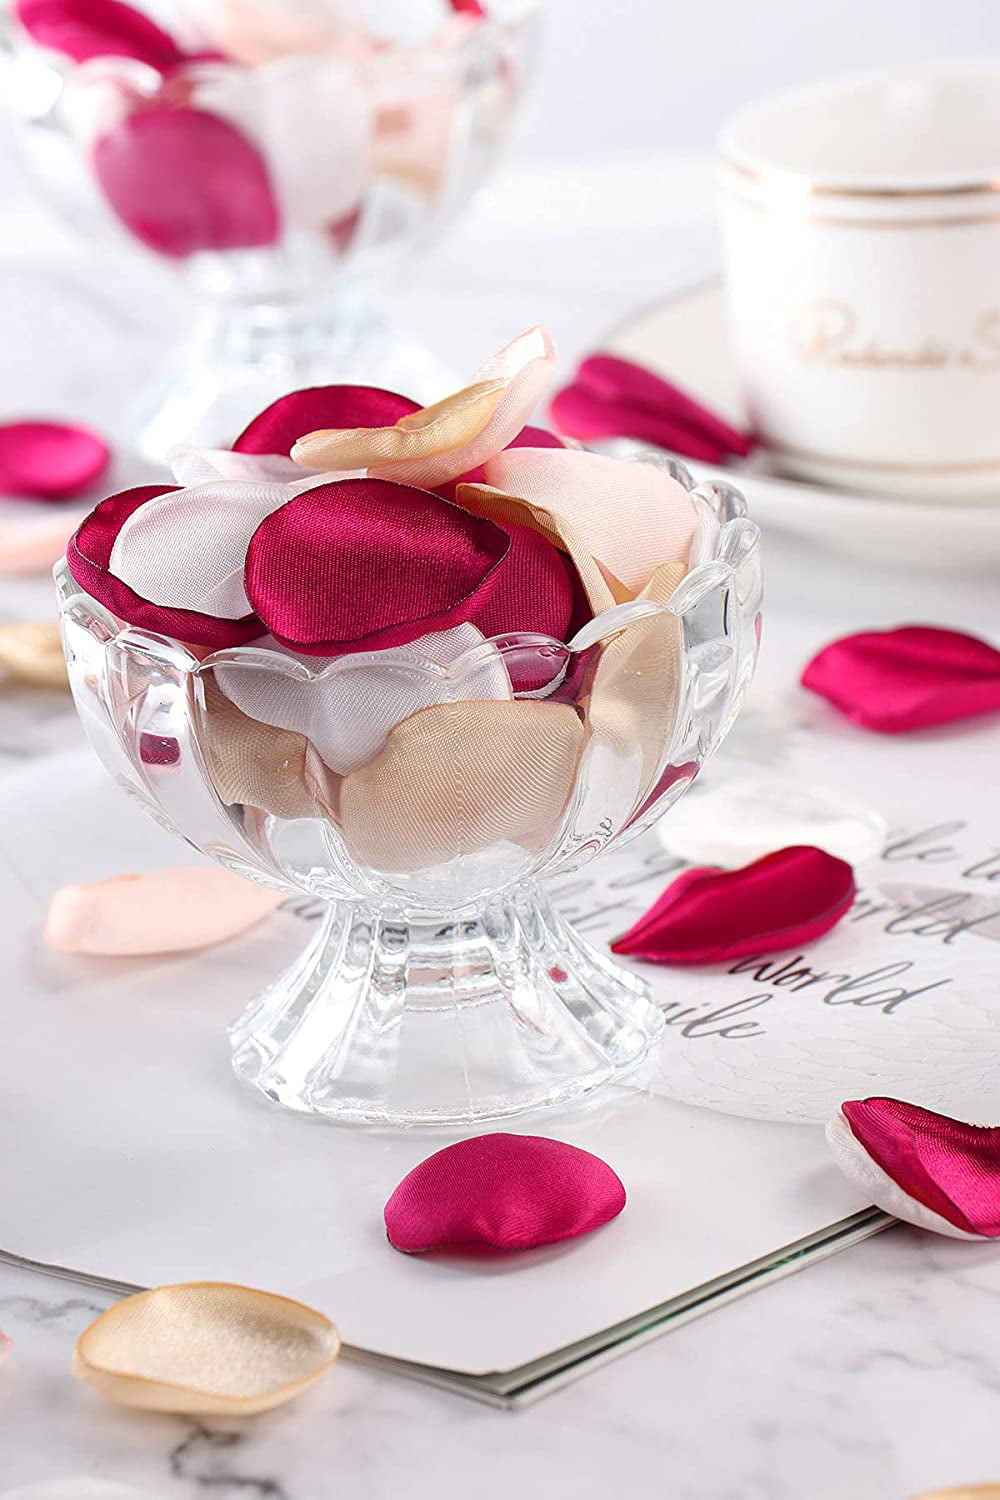 Aivanart 400pcs Silk Rose Petals for Wedding Decorations, Blush Pink Flower Petals for Centerpieces Reception Tables Rustic Decor Flower Girl